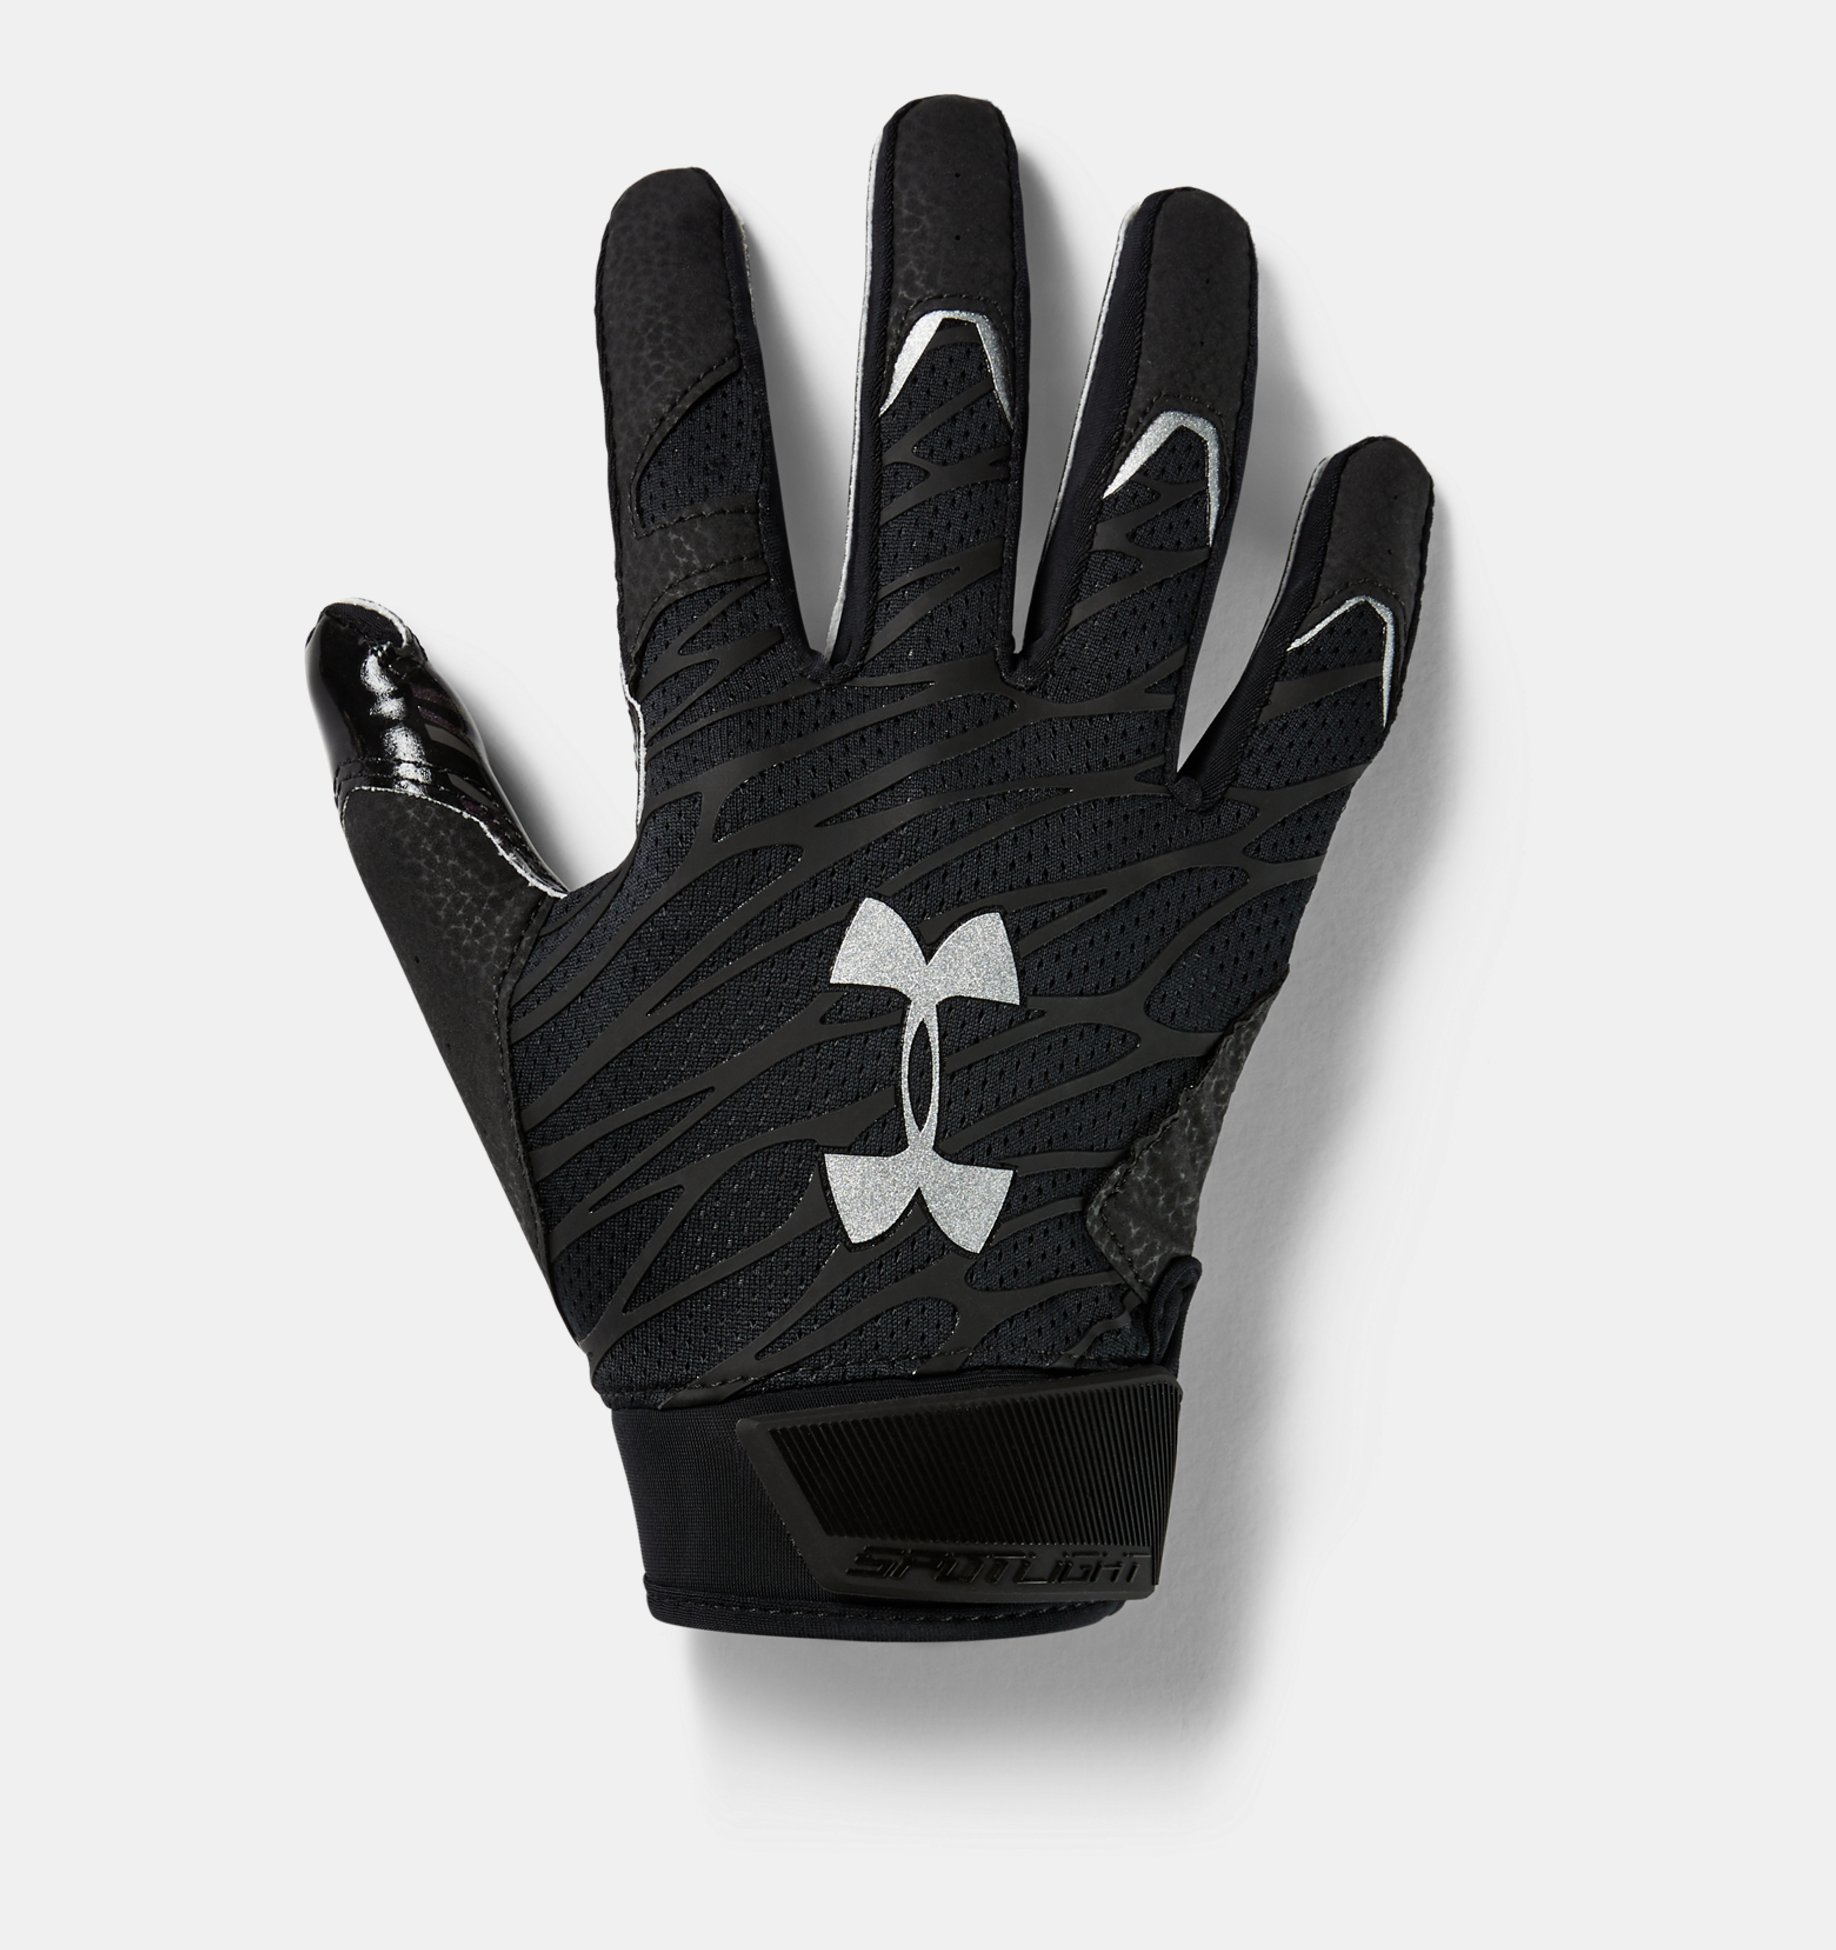 New Under Armour Men's Black/Gold Spotlight WR Football Gloves 